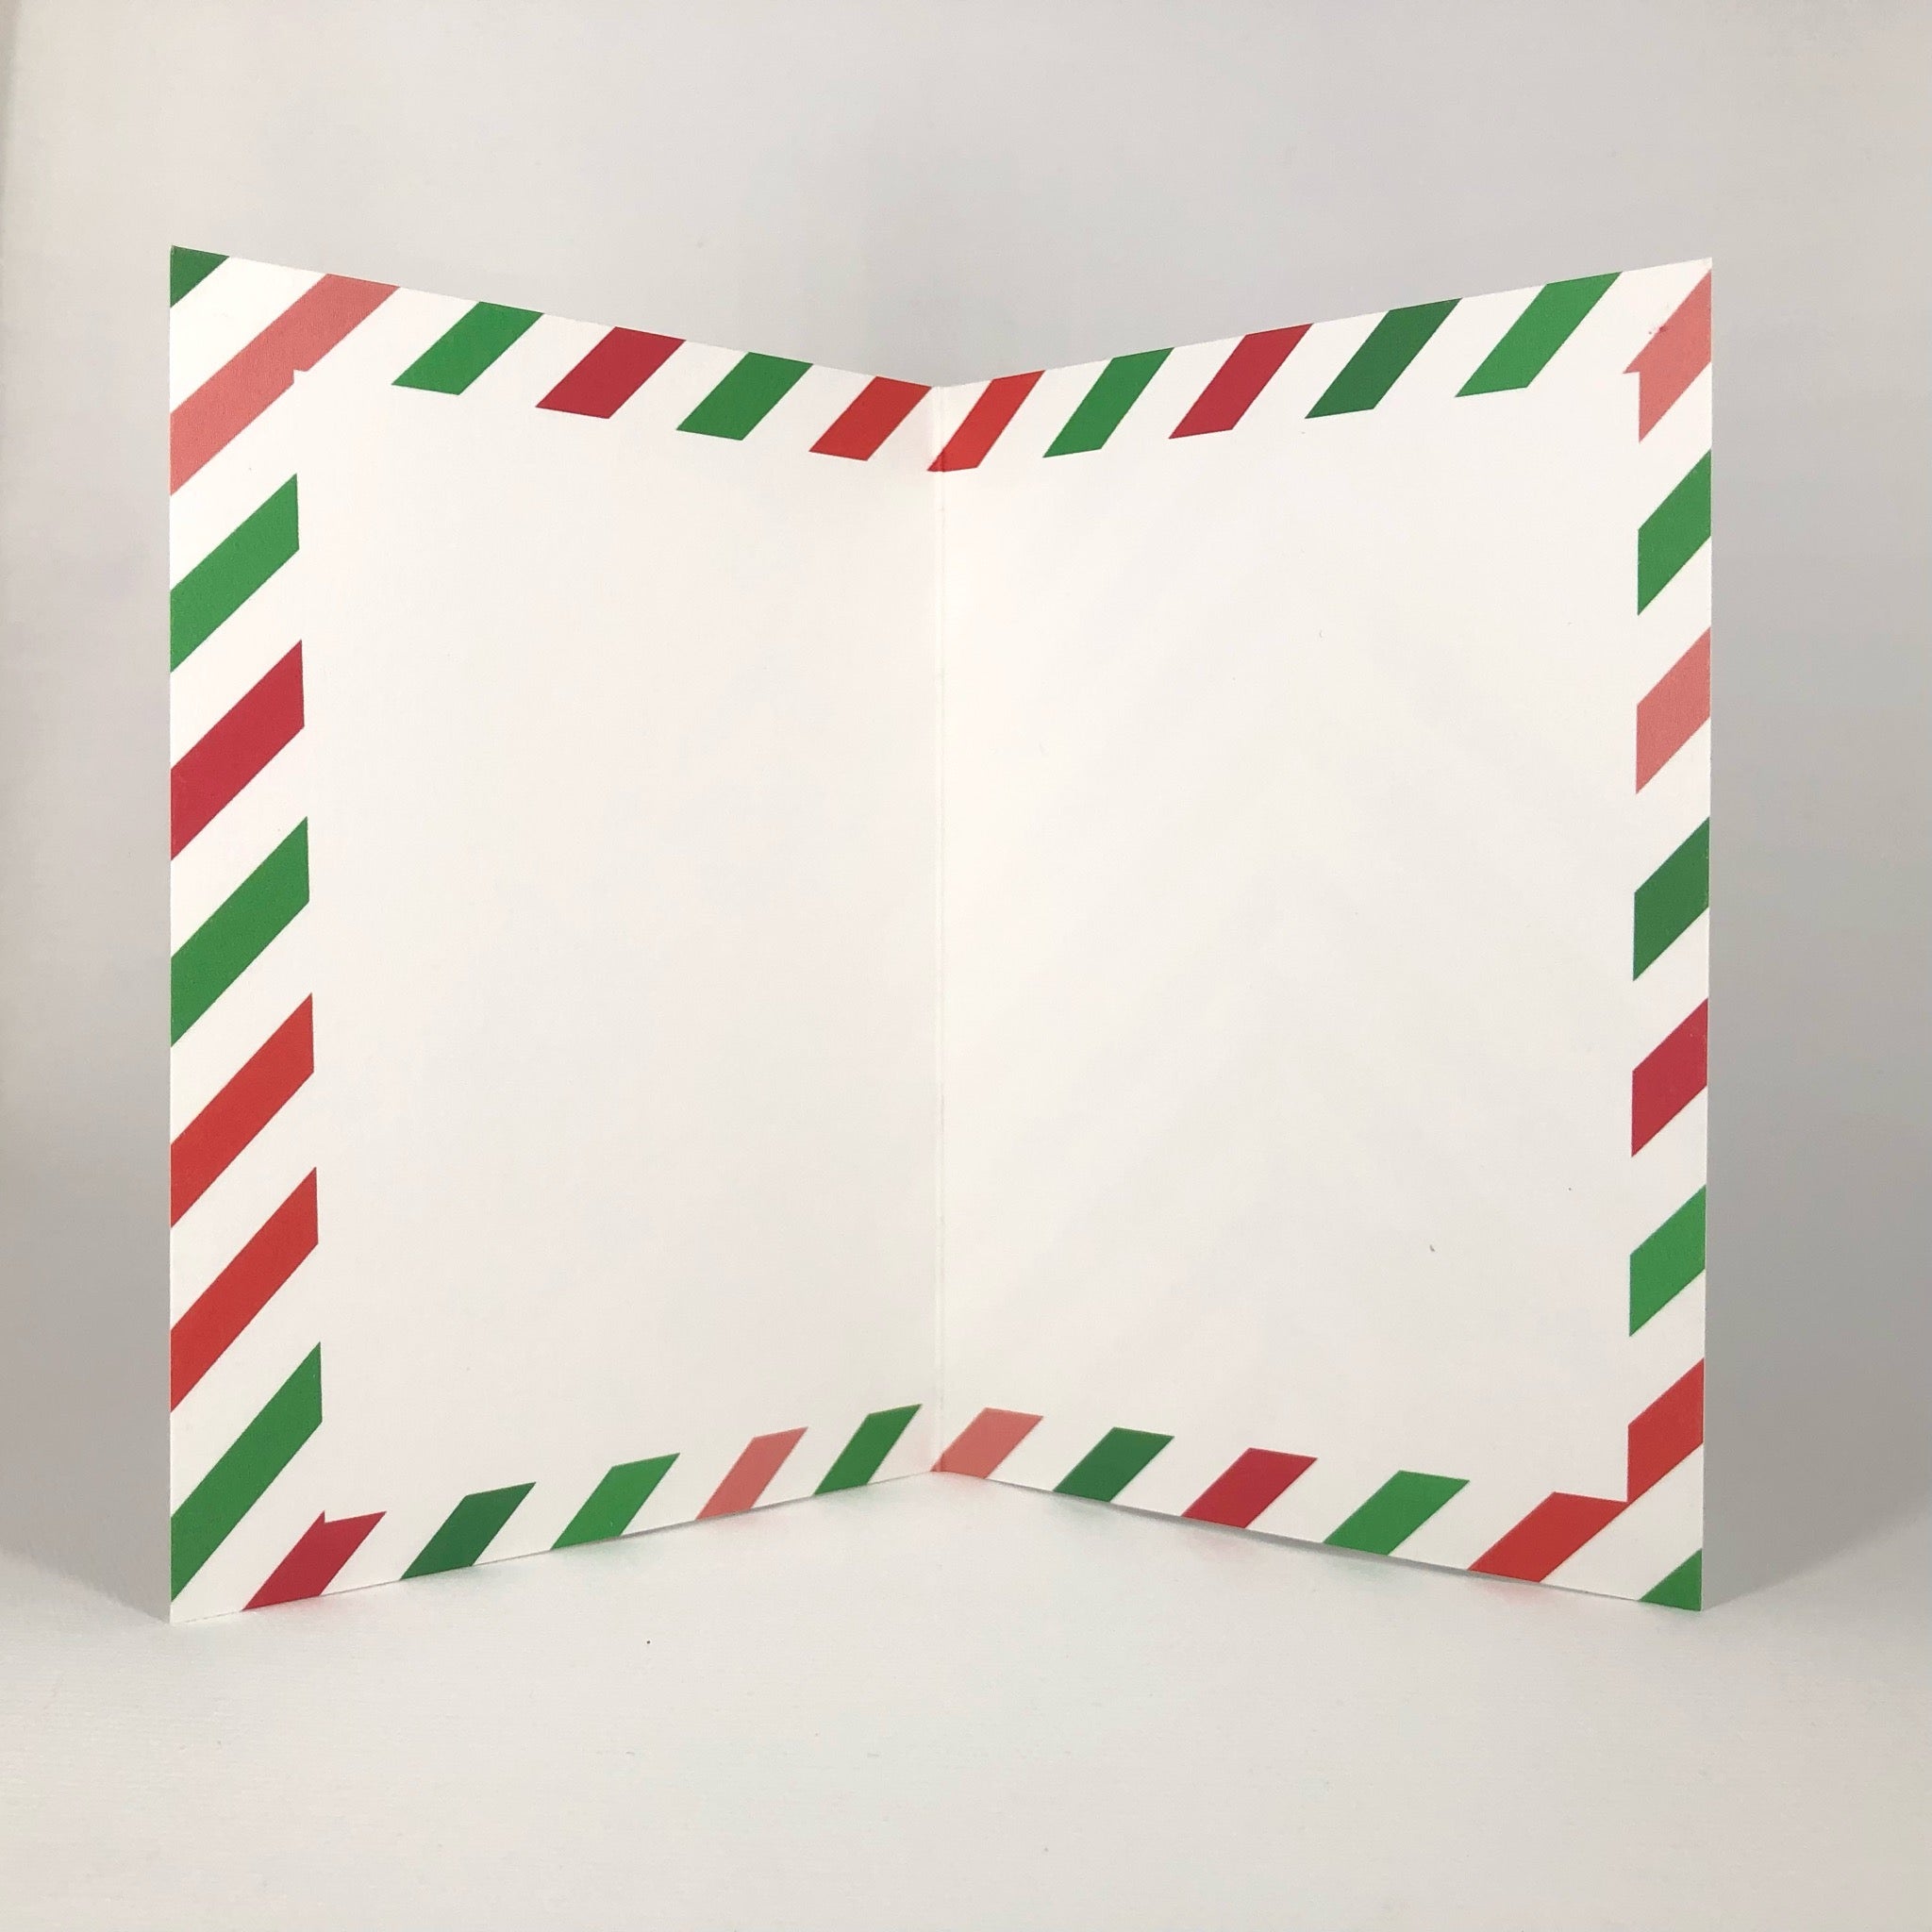 Motley Blooms - Make Merry Greeting Card